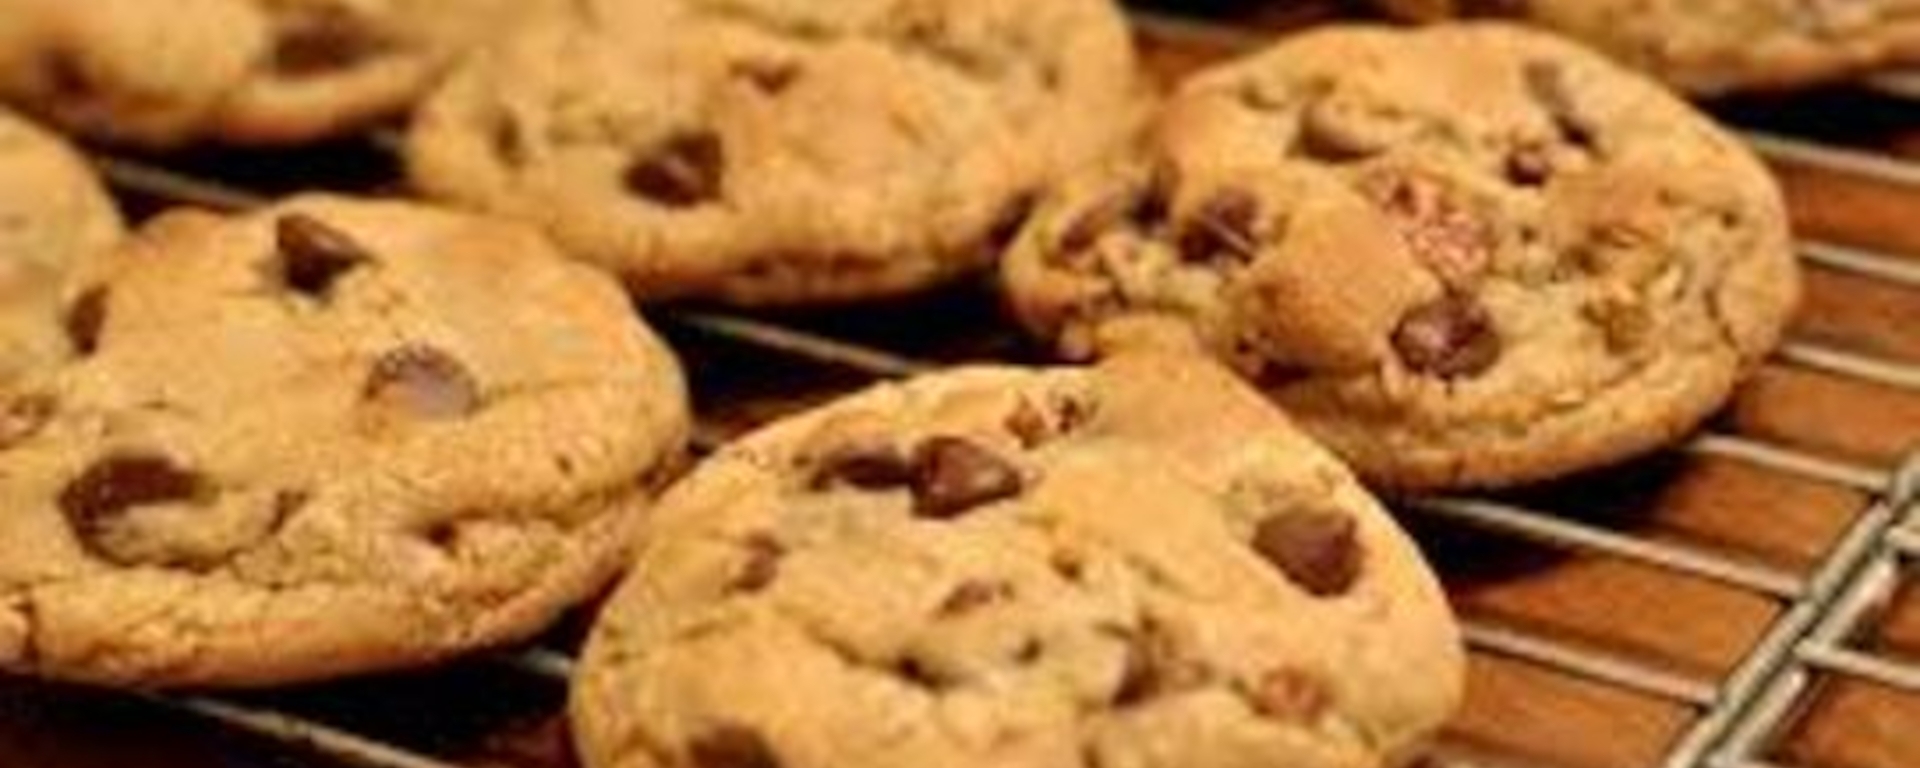 LuvMyRecipe.com - Sugar Free Chocolate Chip Cookies Featured